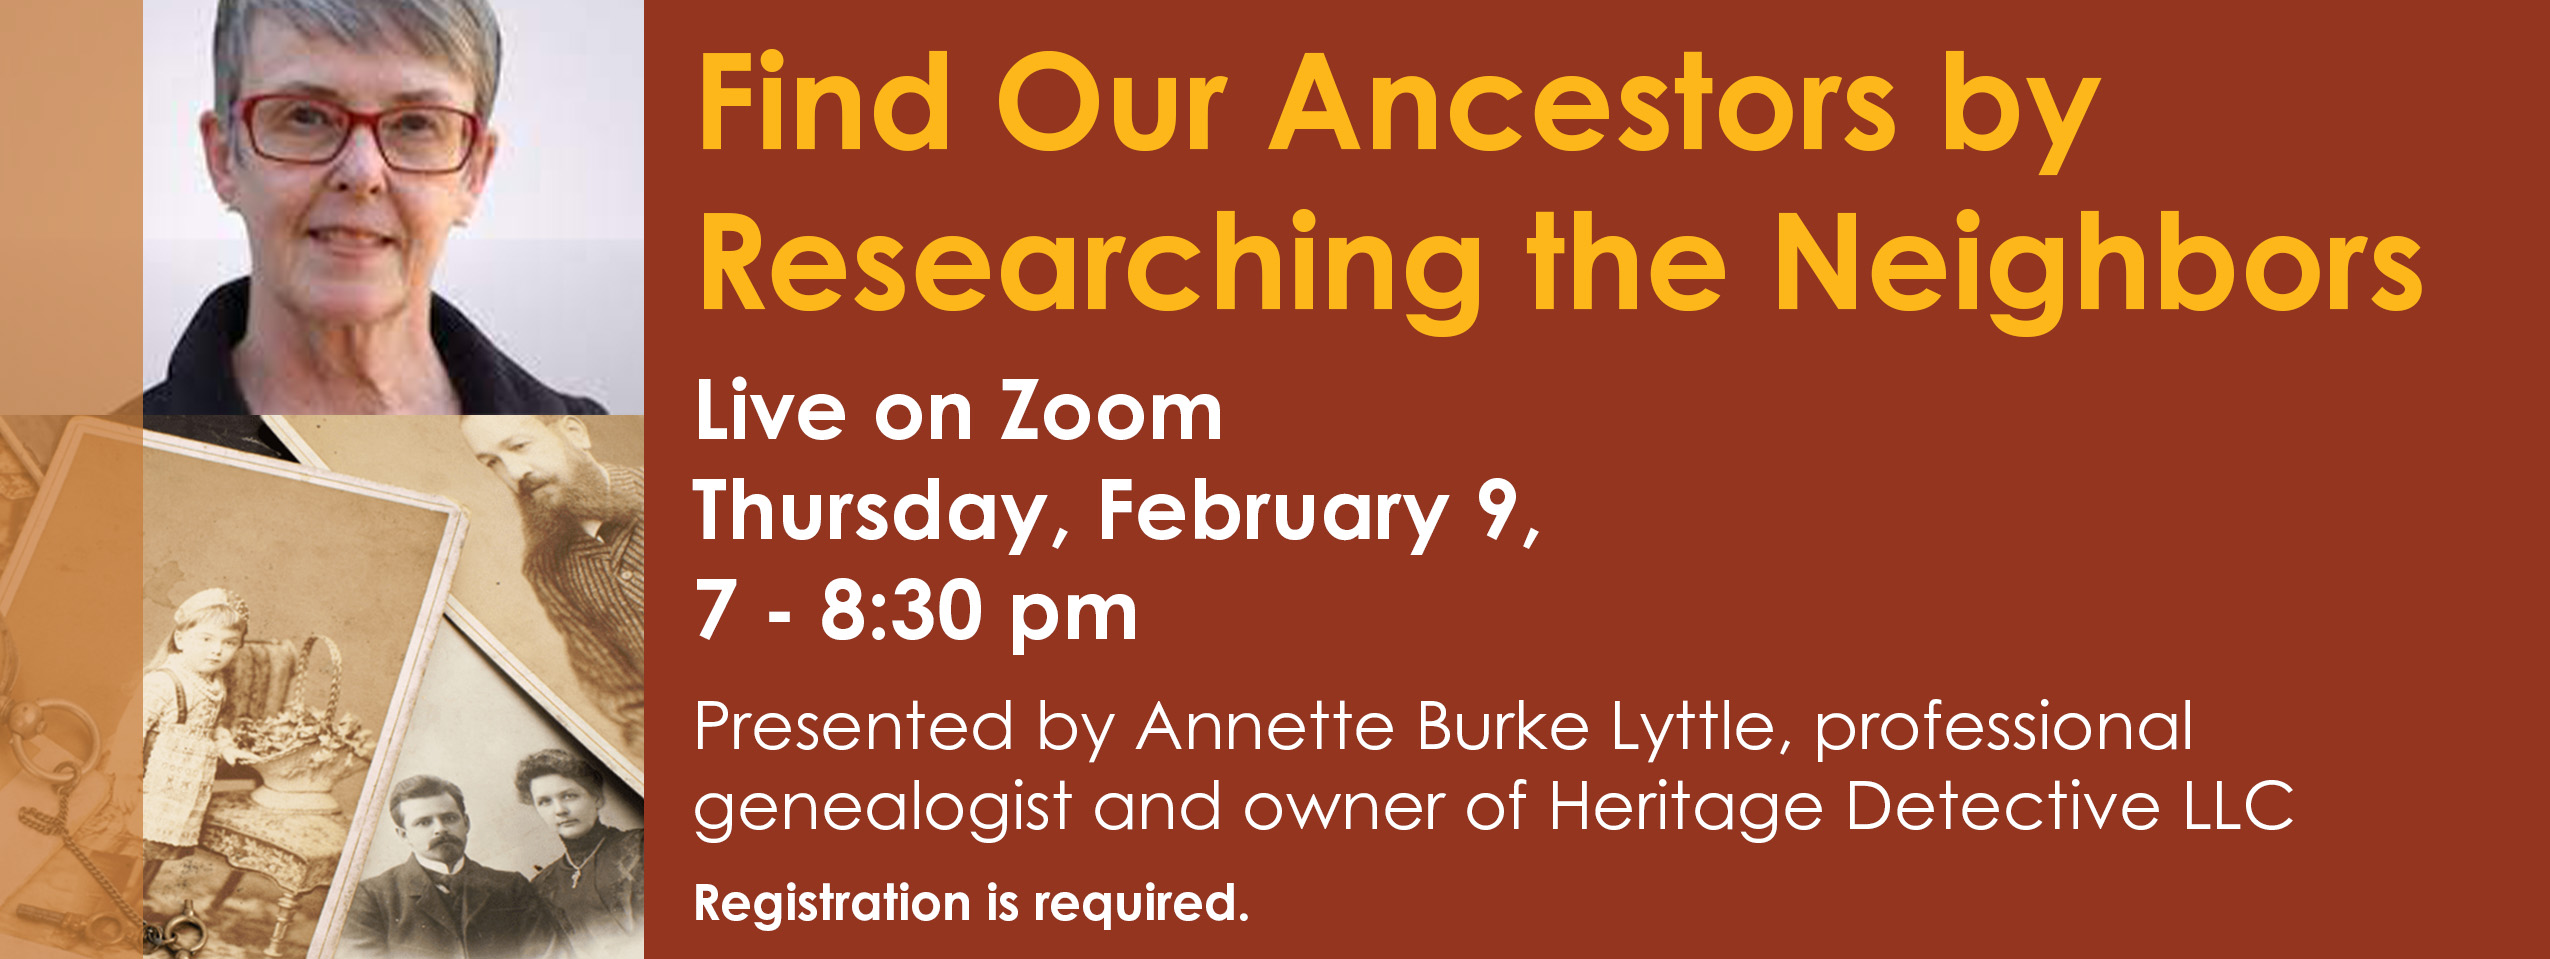 Find Our Ancestors Feb 9